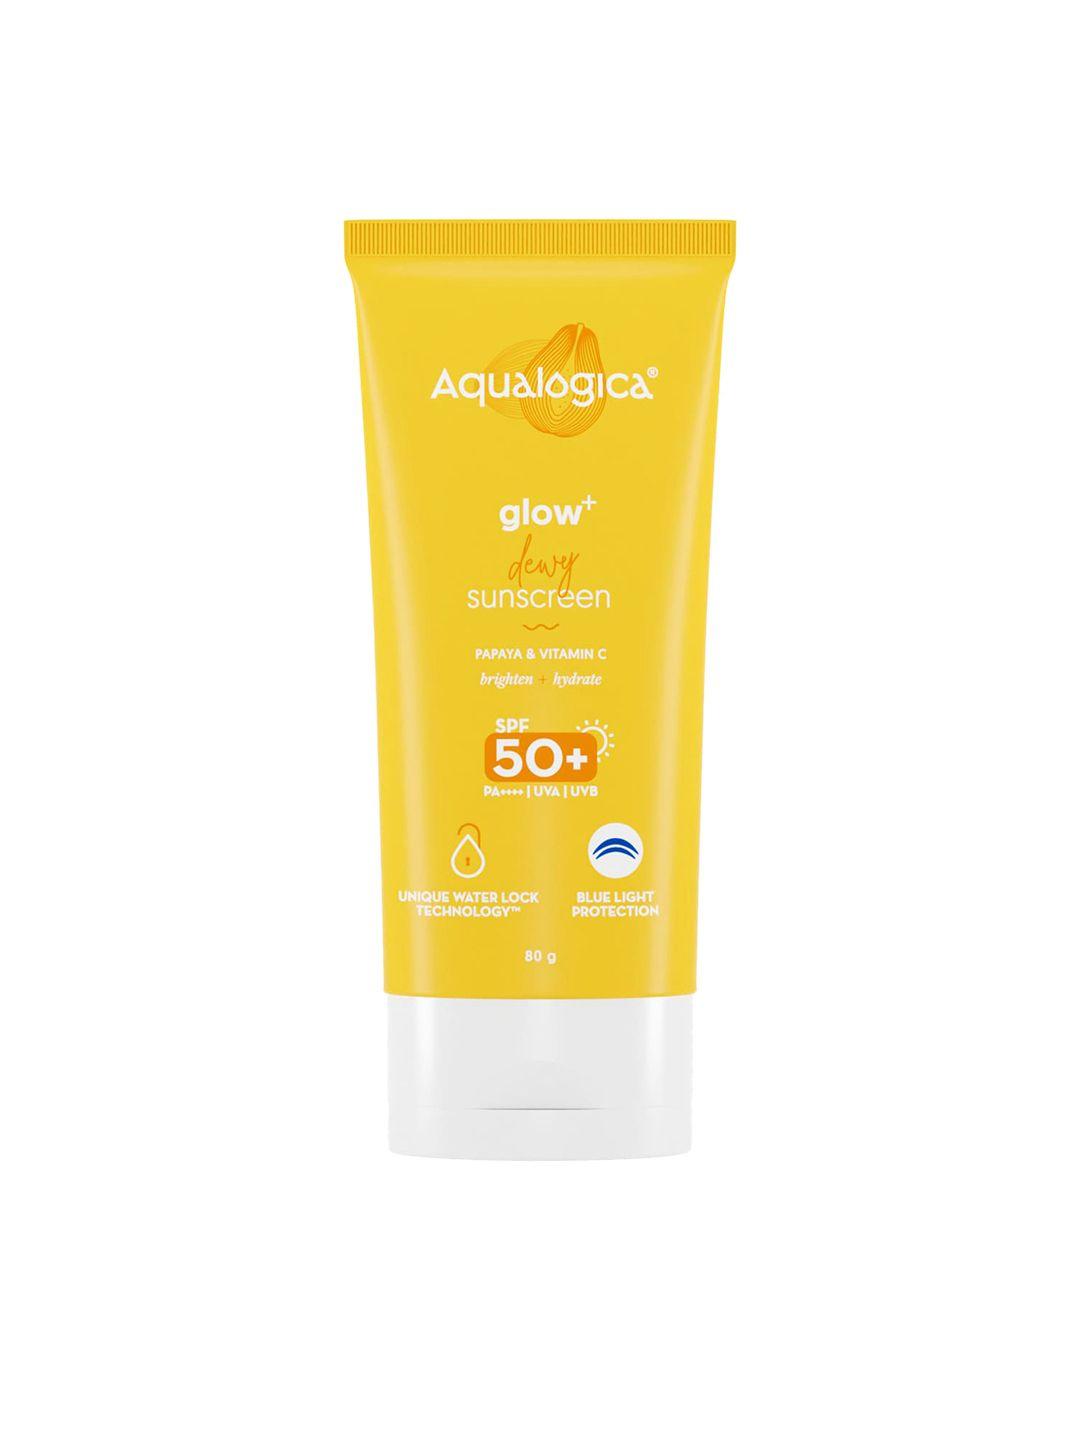 aqualogica glow+ dewy spf50 sunscreen with papaya & vitamin c - 80 g